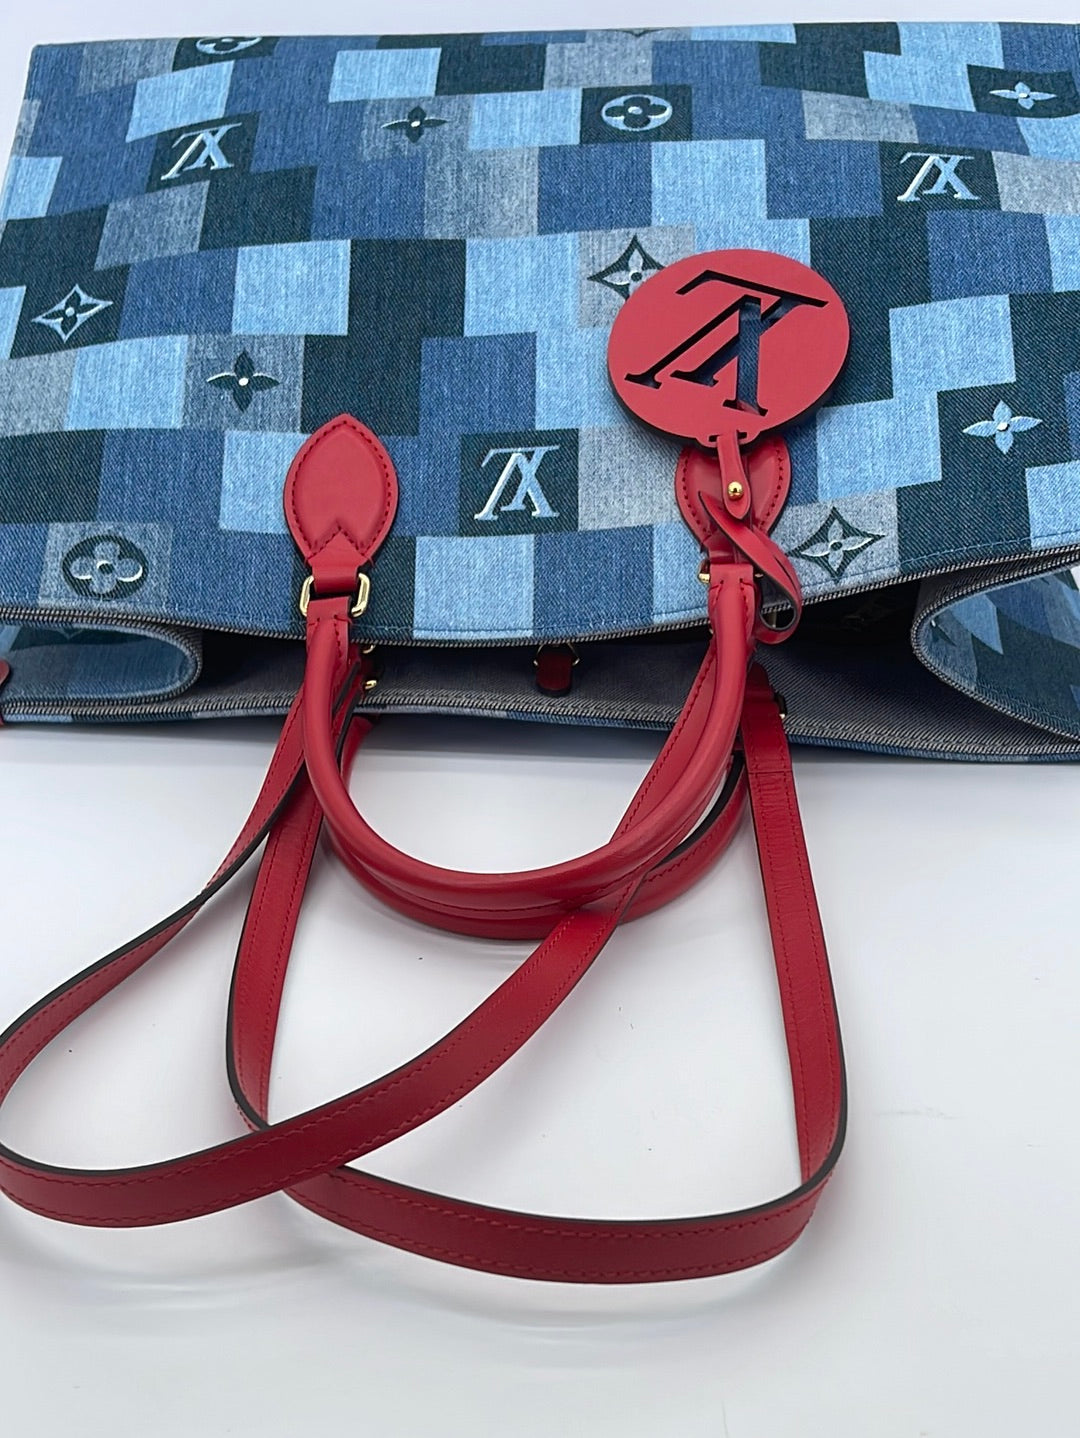 Louis Vuitton ONTHEGO GM Tote Shoulder Bag M44992 Denim Blue Monogram Woman  New